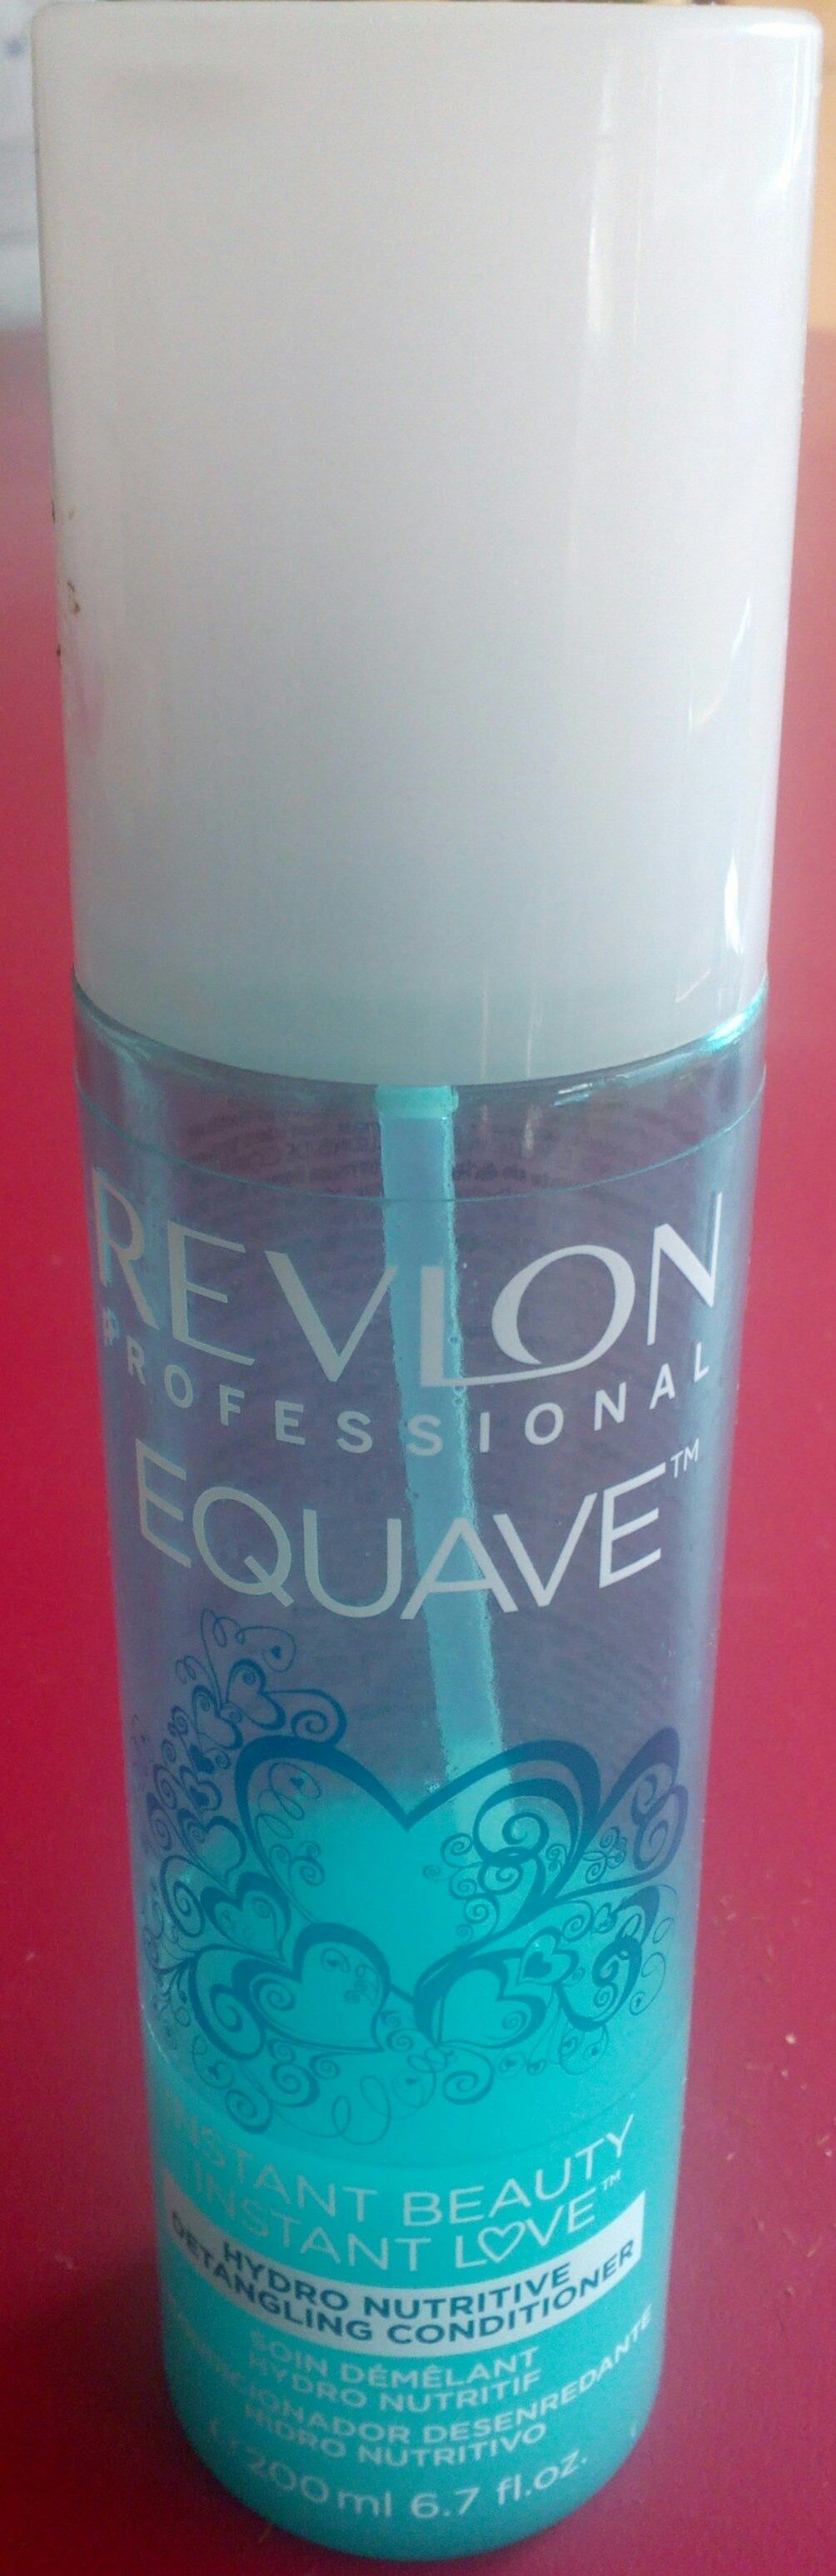 Revlon professional equave Hydro nutritive detangling conditioner soin démêlant hydro nutritif - Produto - en